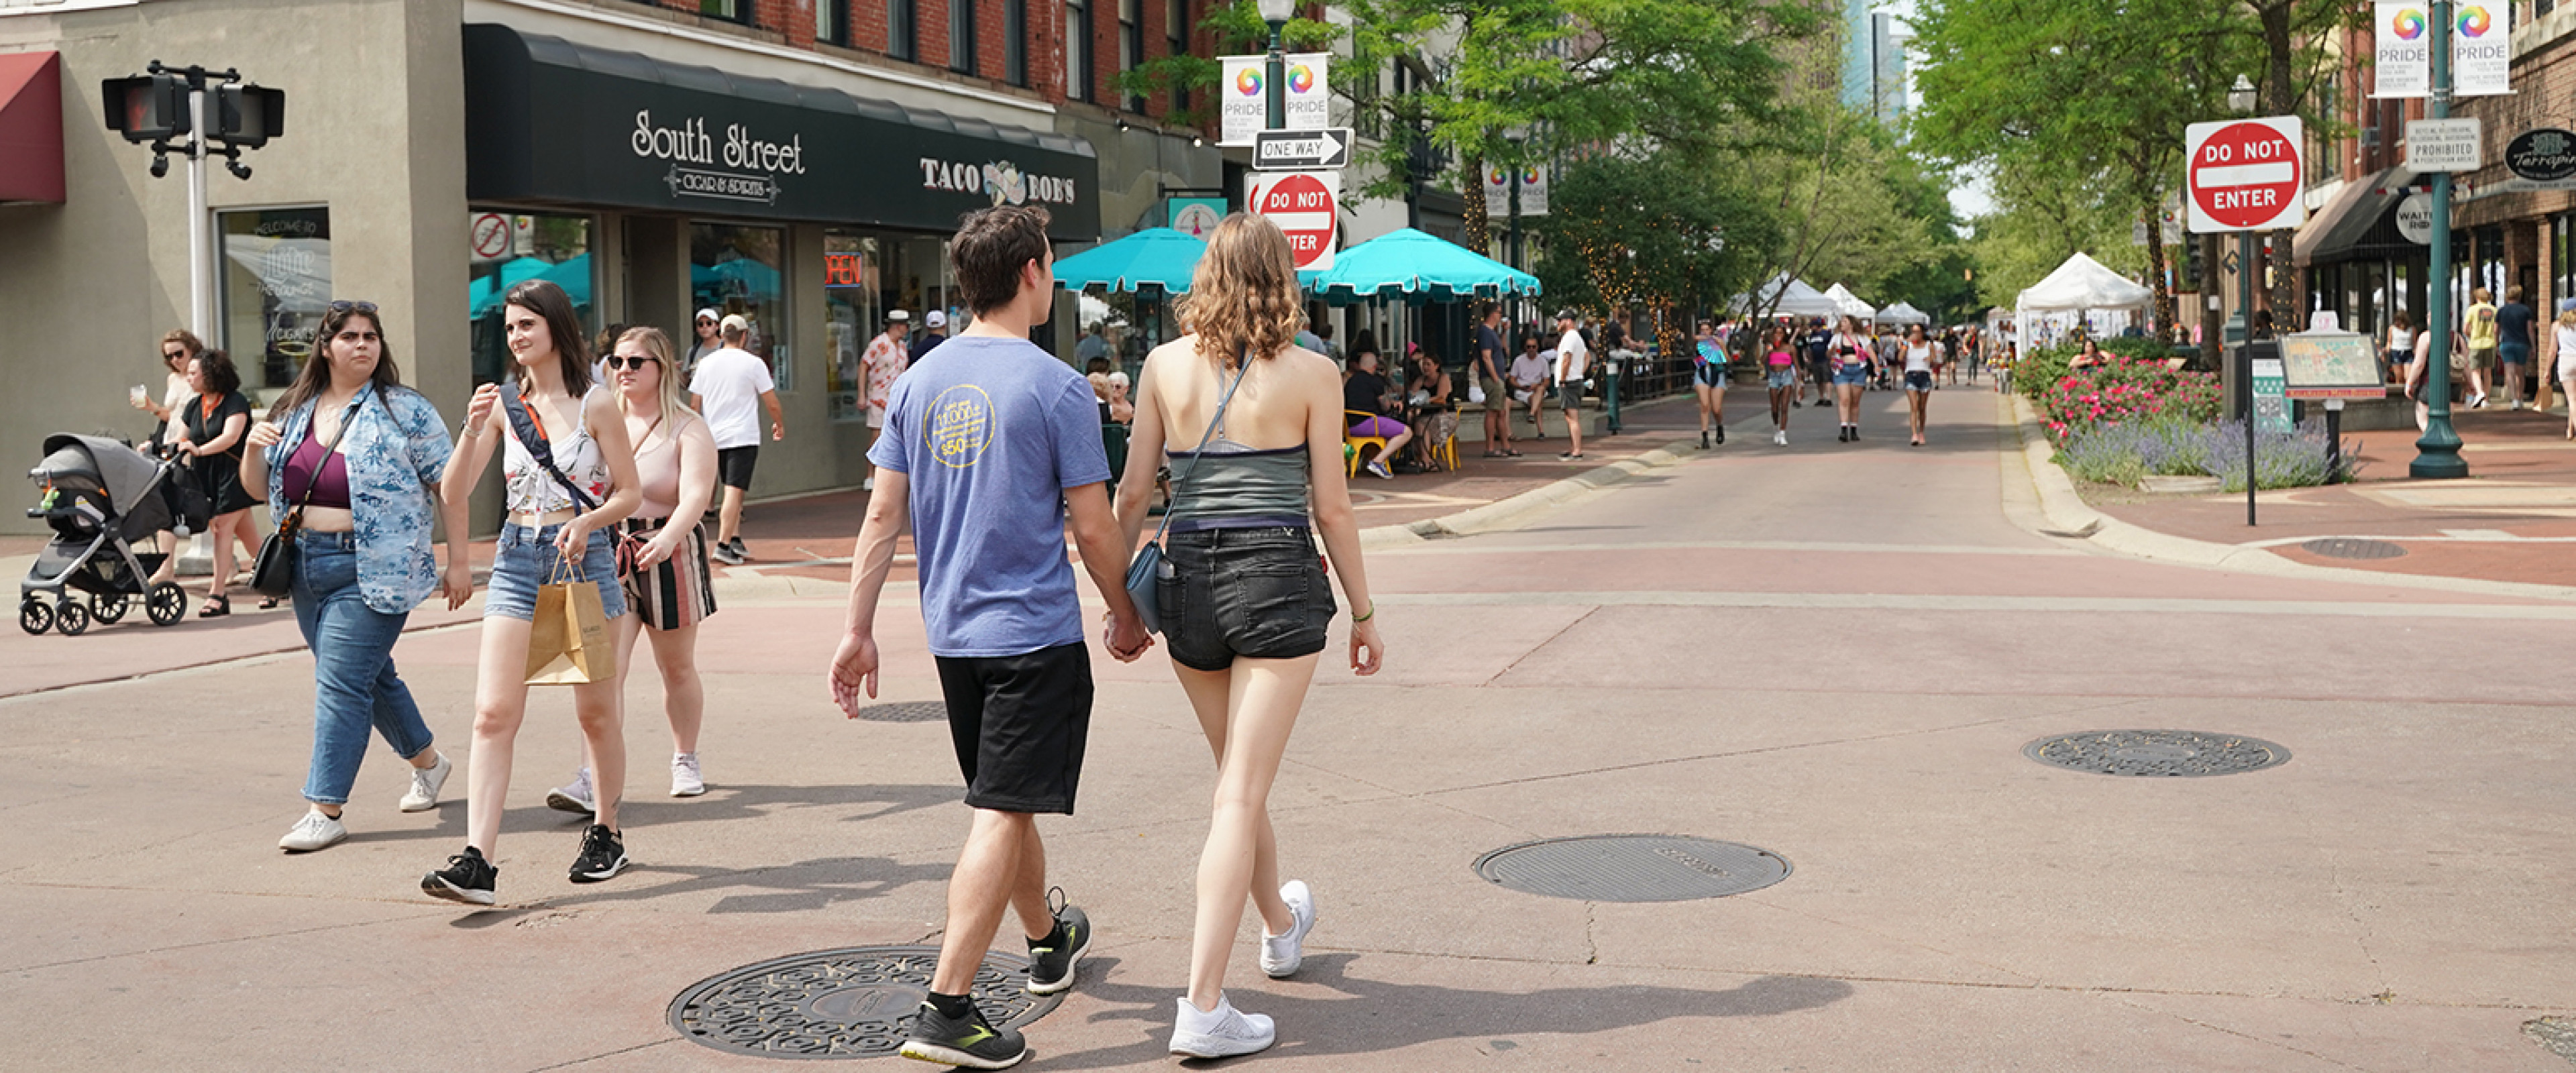 Photo of people walking downtown Kalamazoo